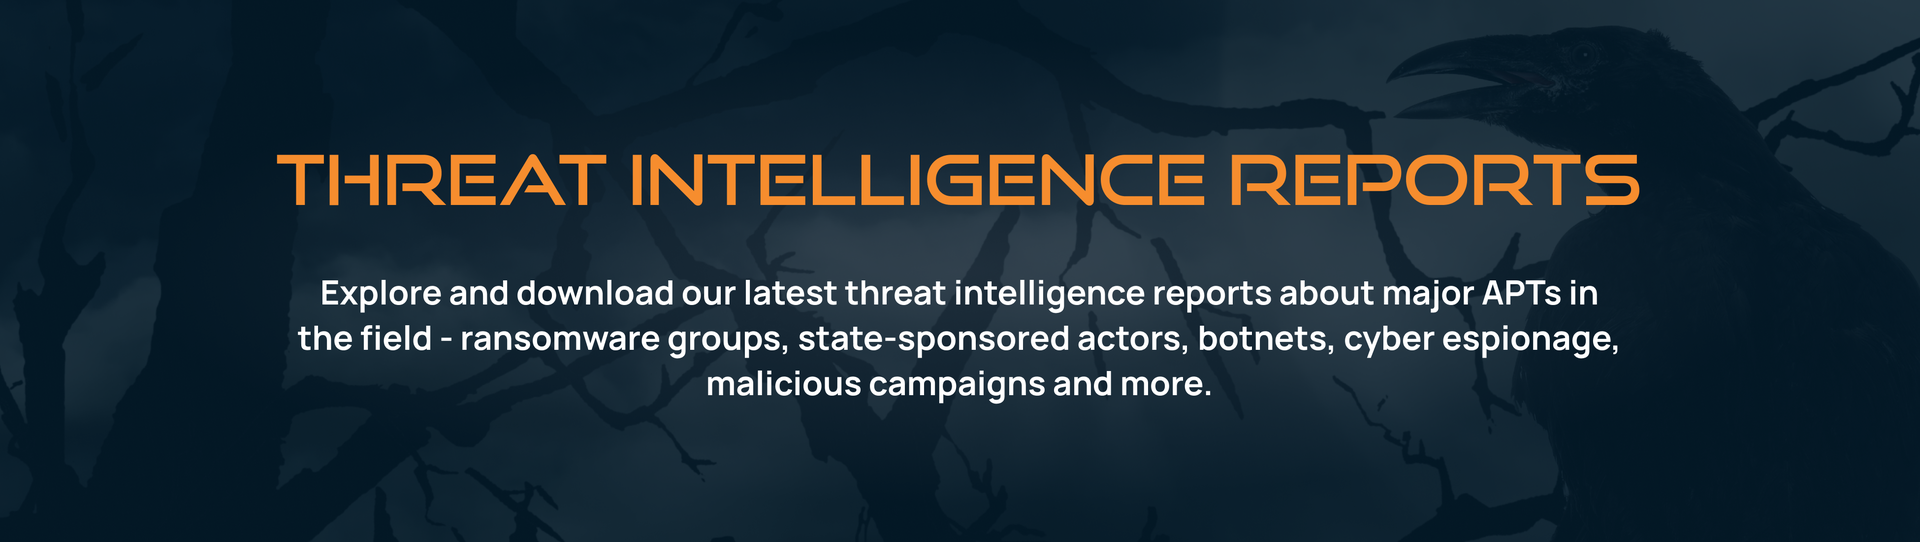 Threat Intelligence Reports